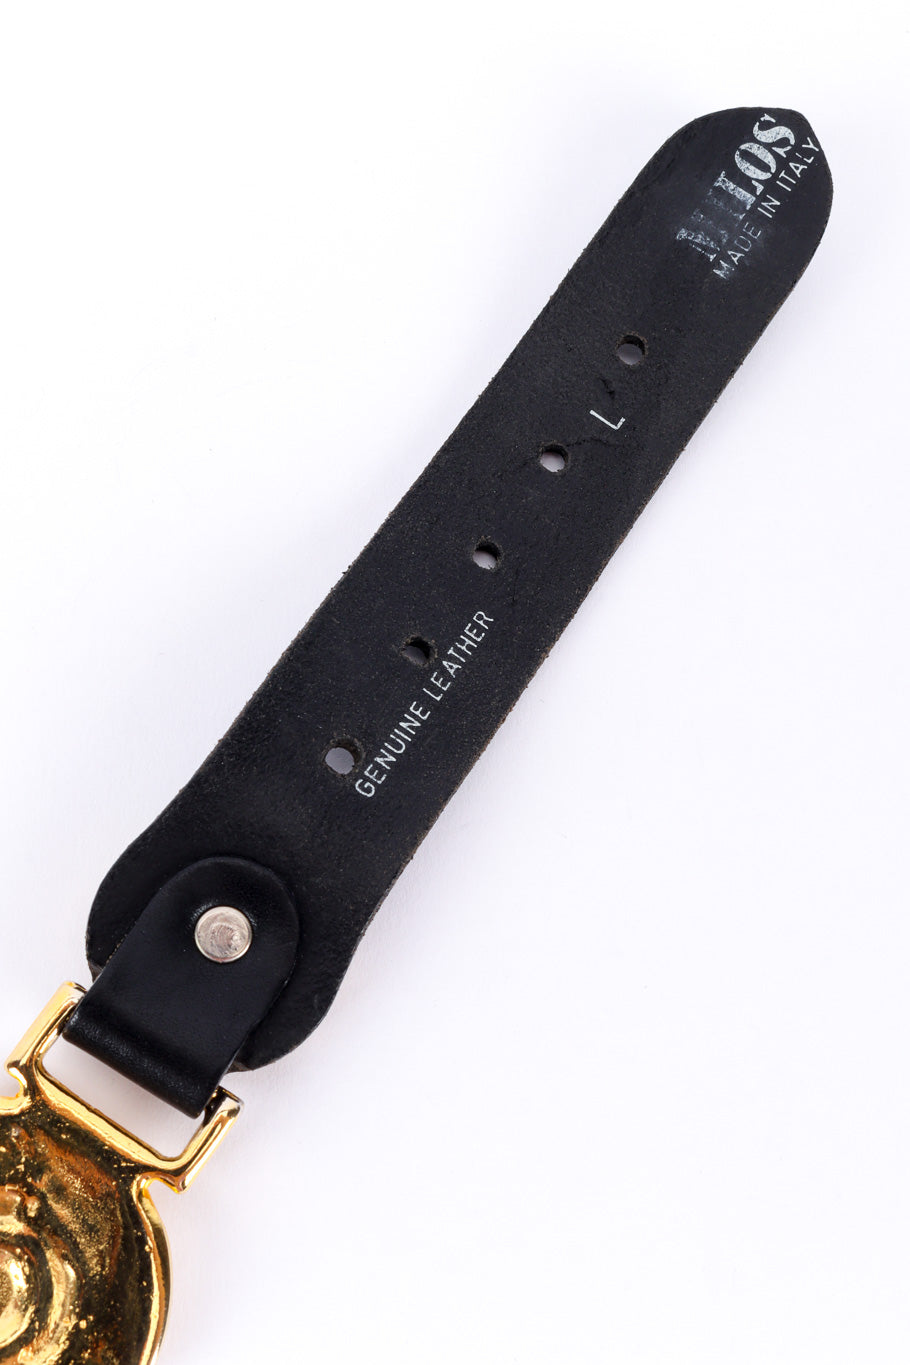 Medallion linked leather belt by Milos on white background end tab @recessla